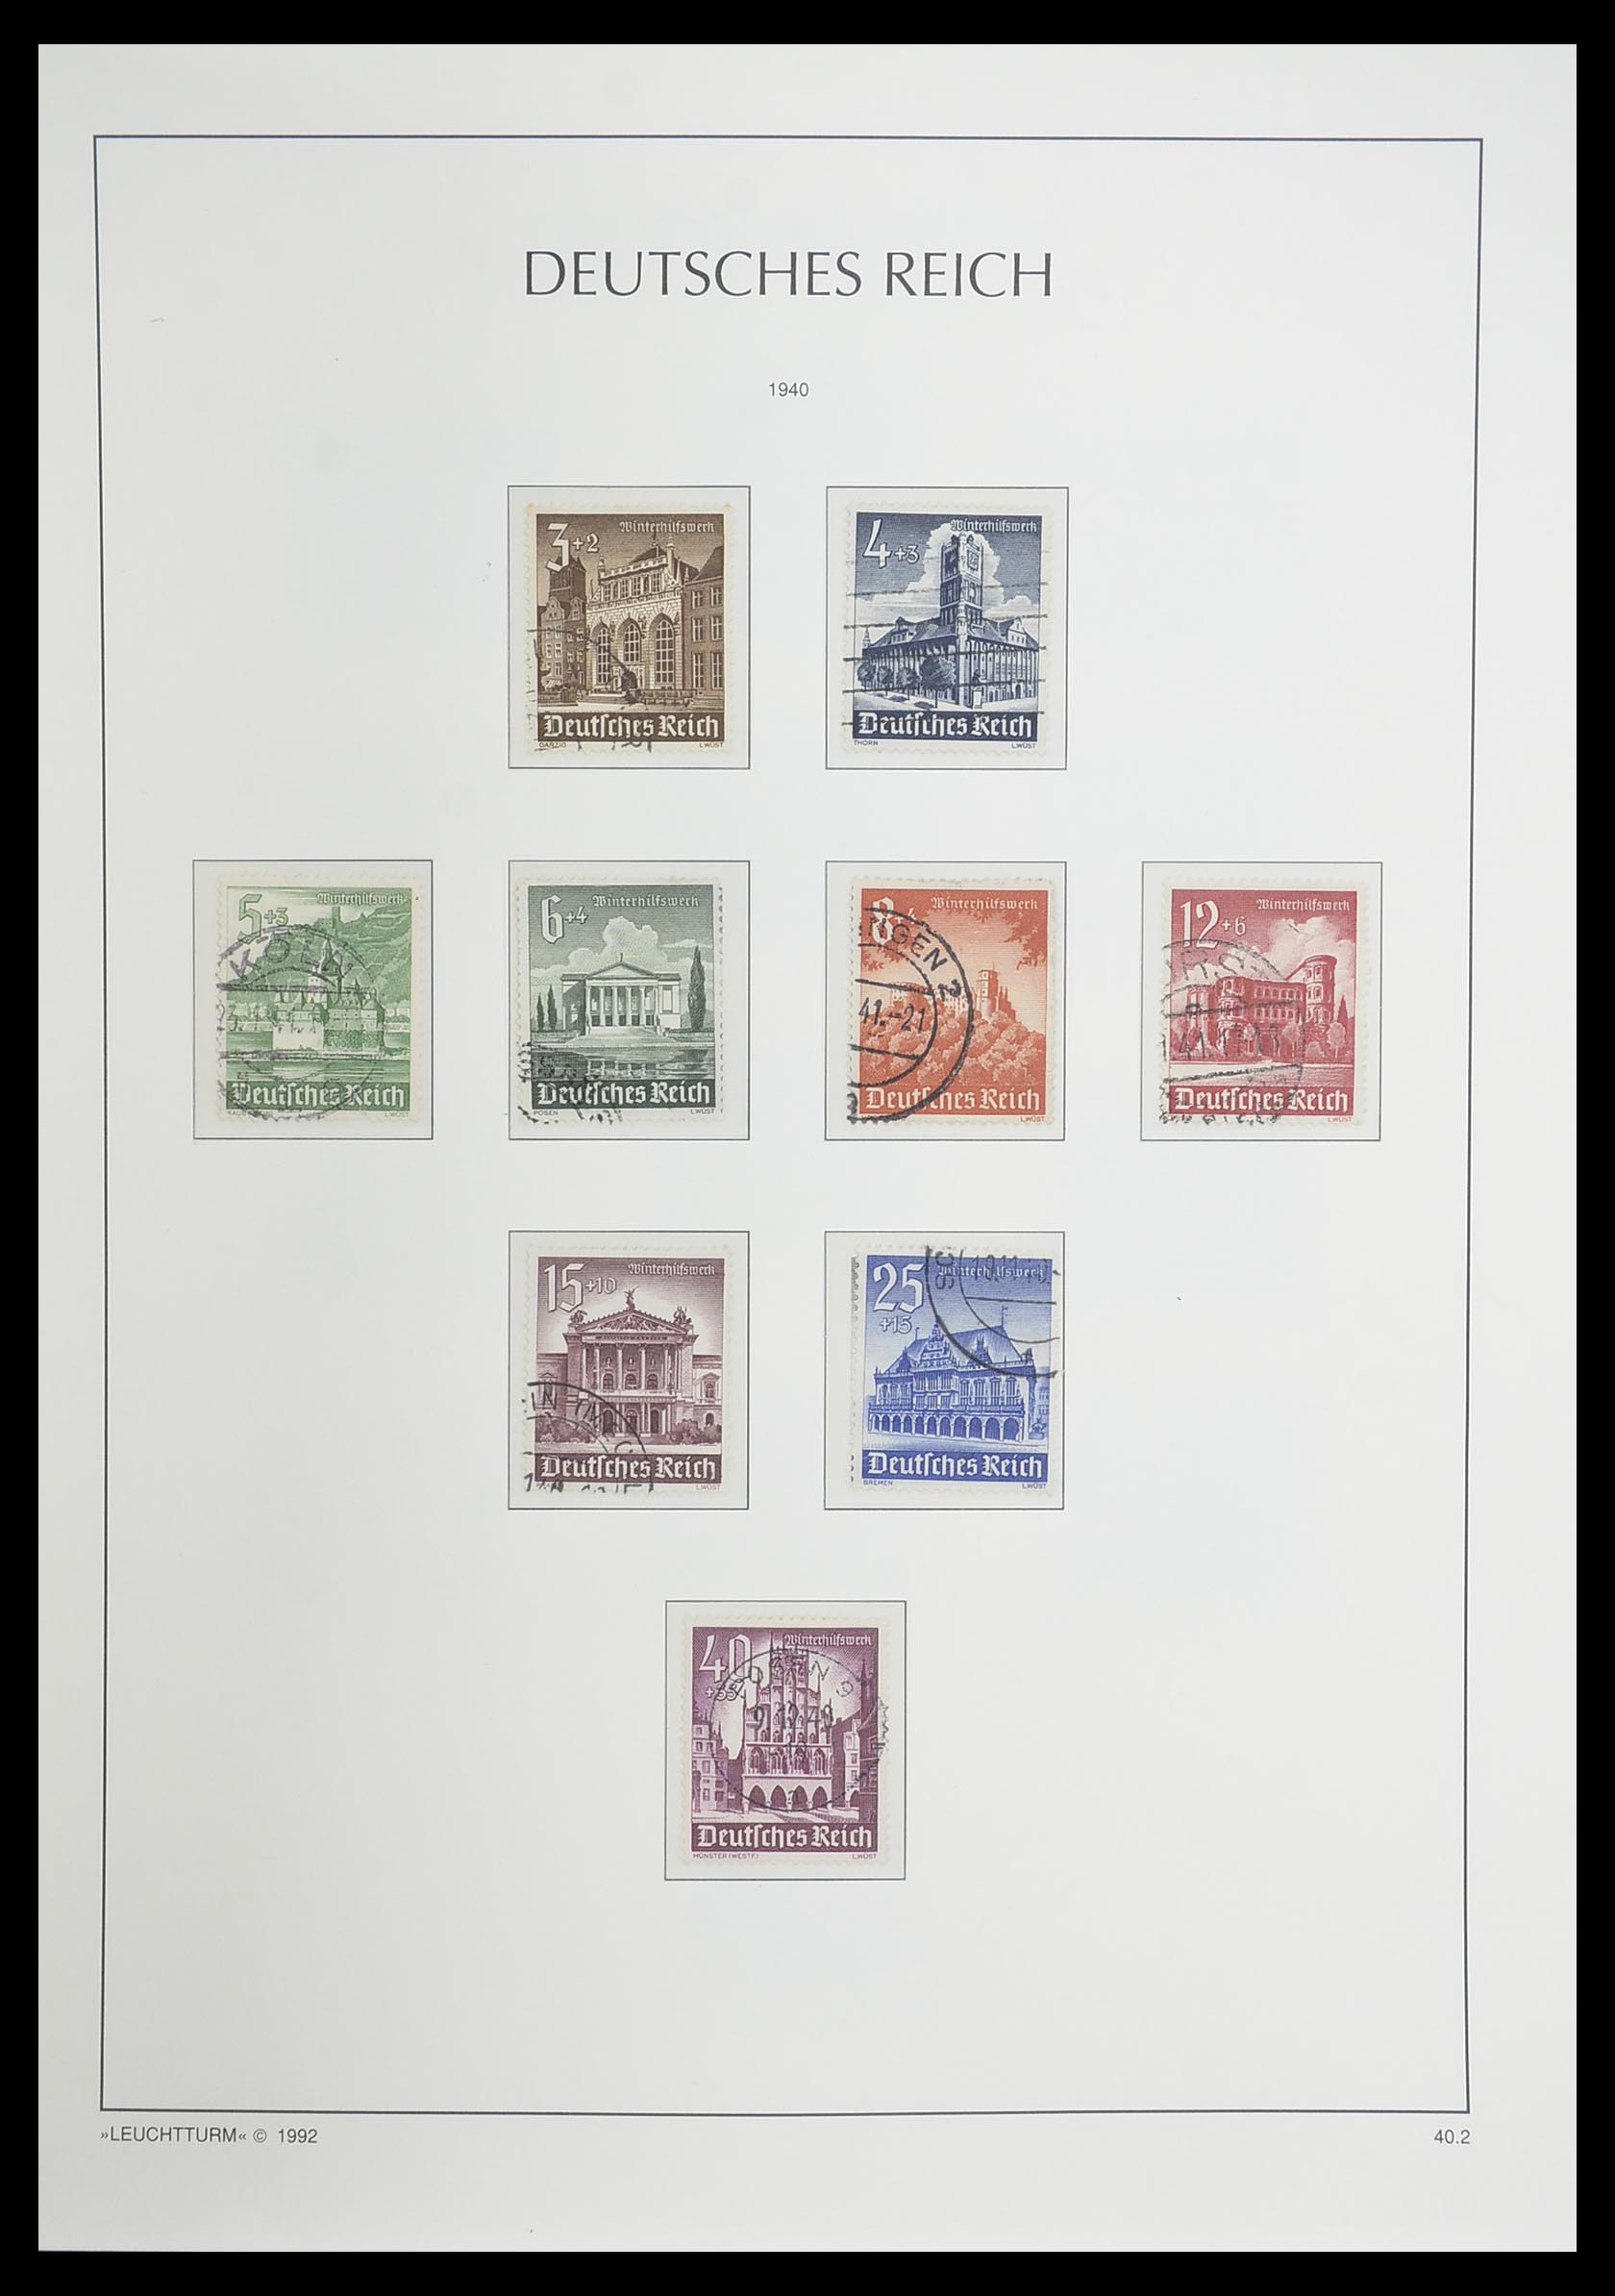 33455 081 - Stamp collection 33455 German Reich 1872-1945.